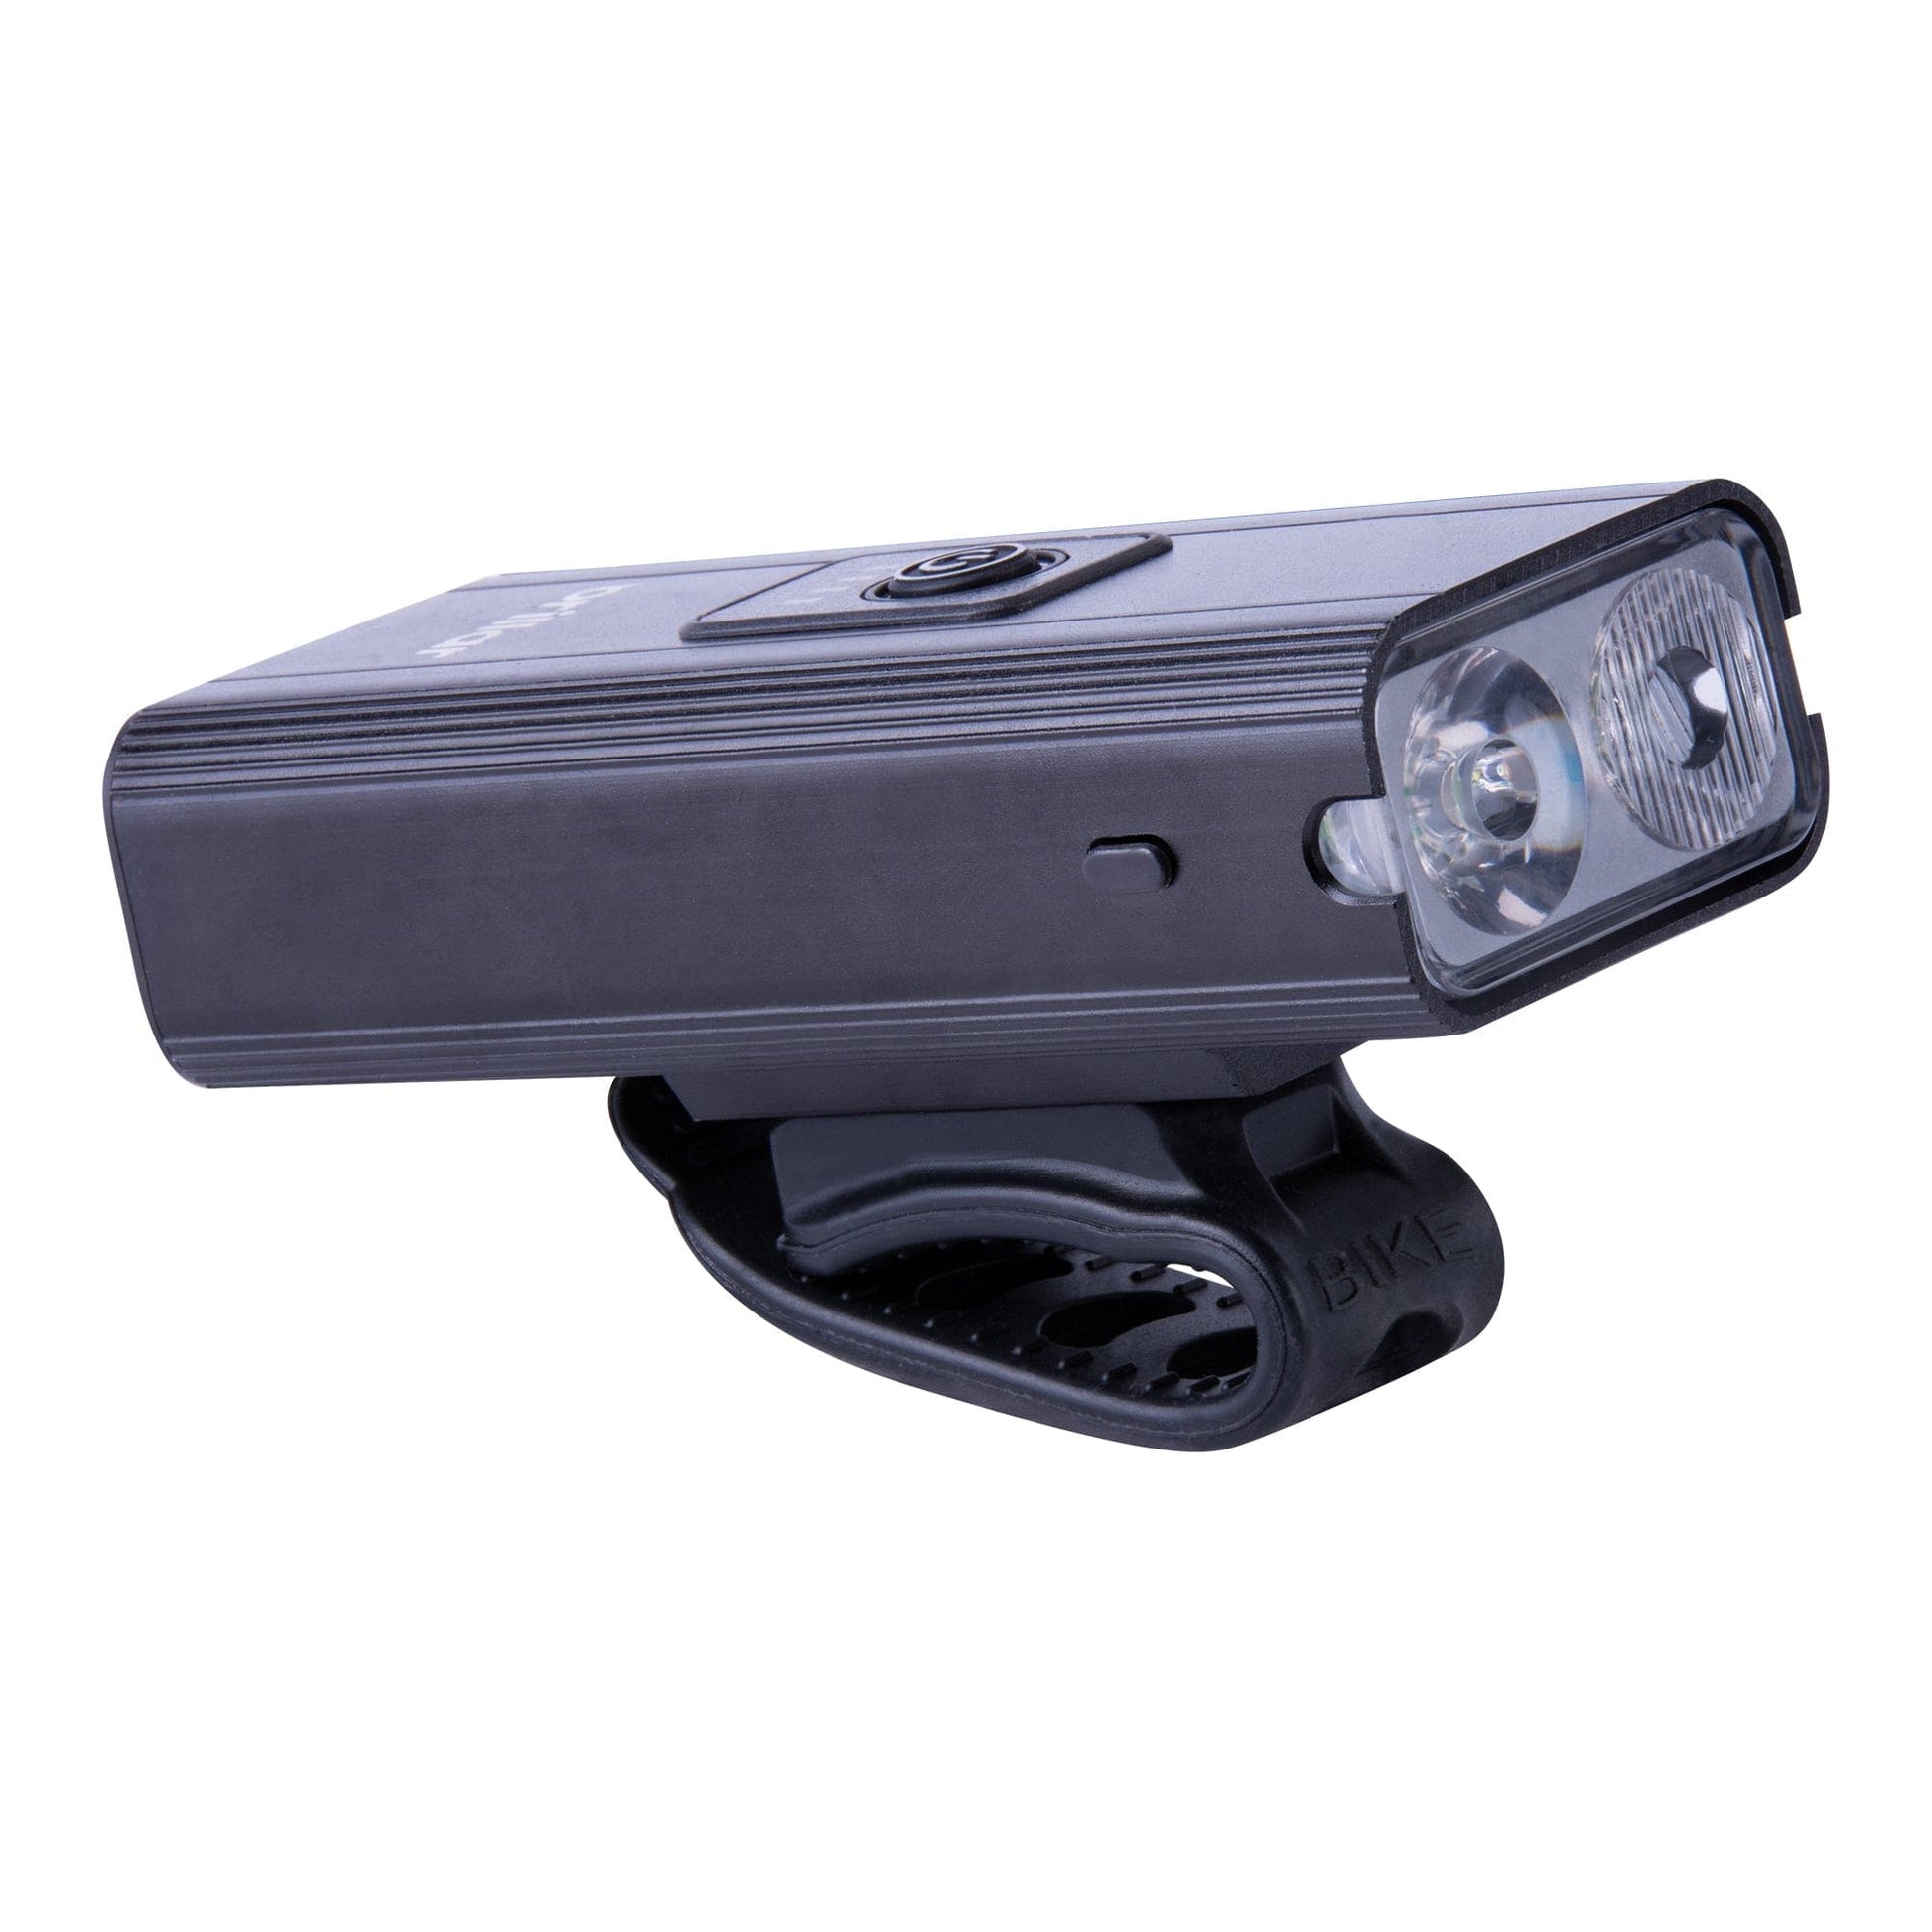 Brillar 300 Lumen USB Rechargeable Multifunctional Bike Rider Light